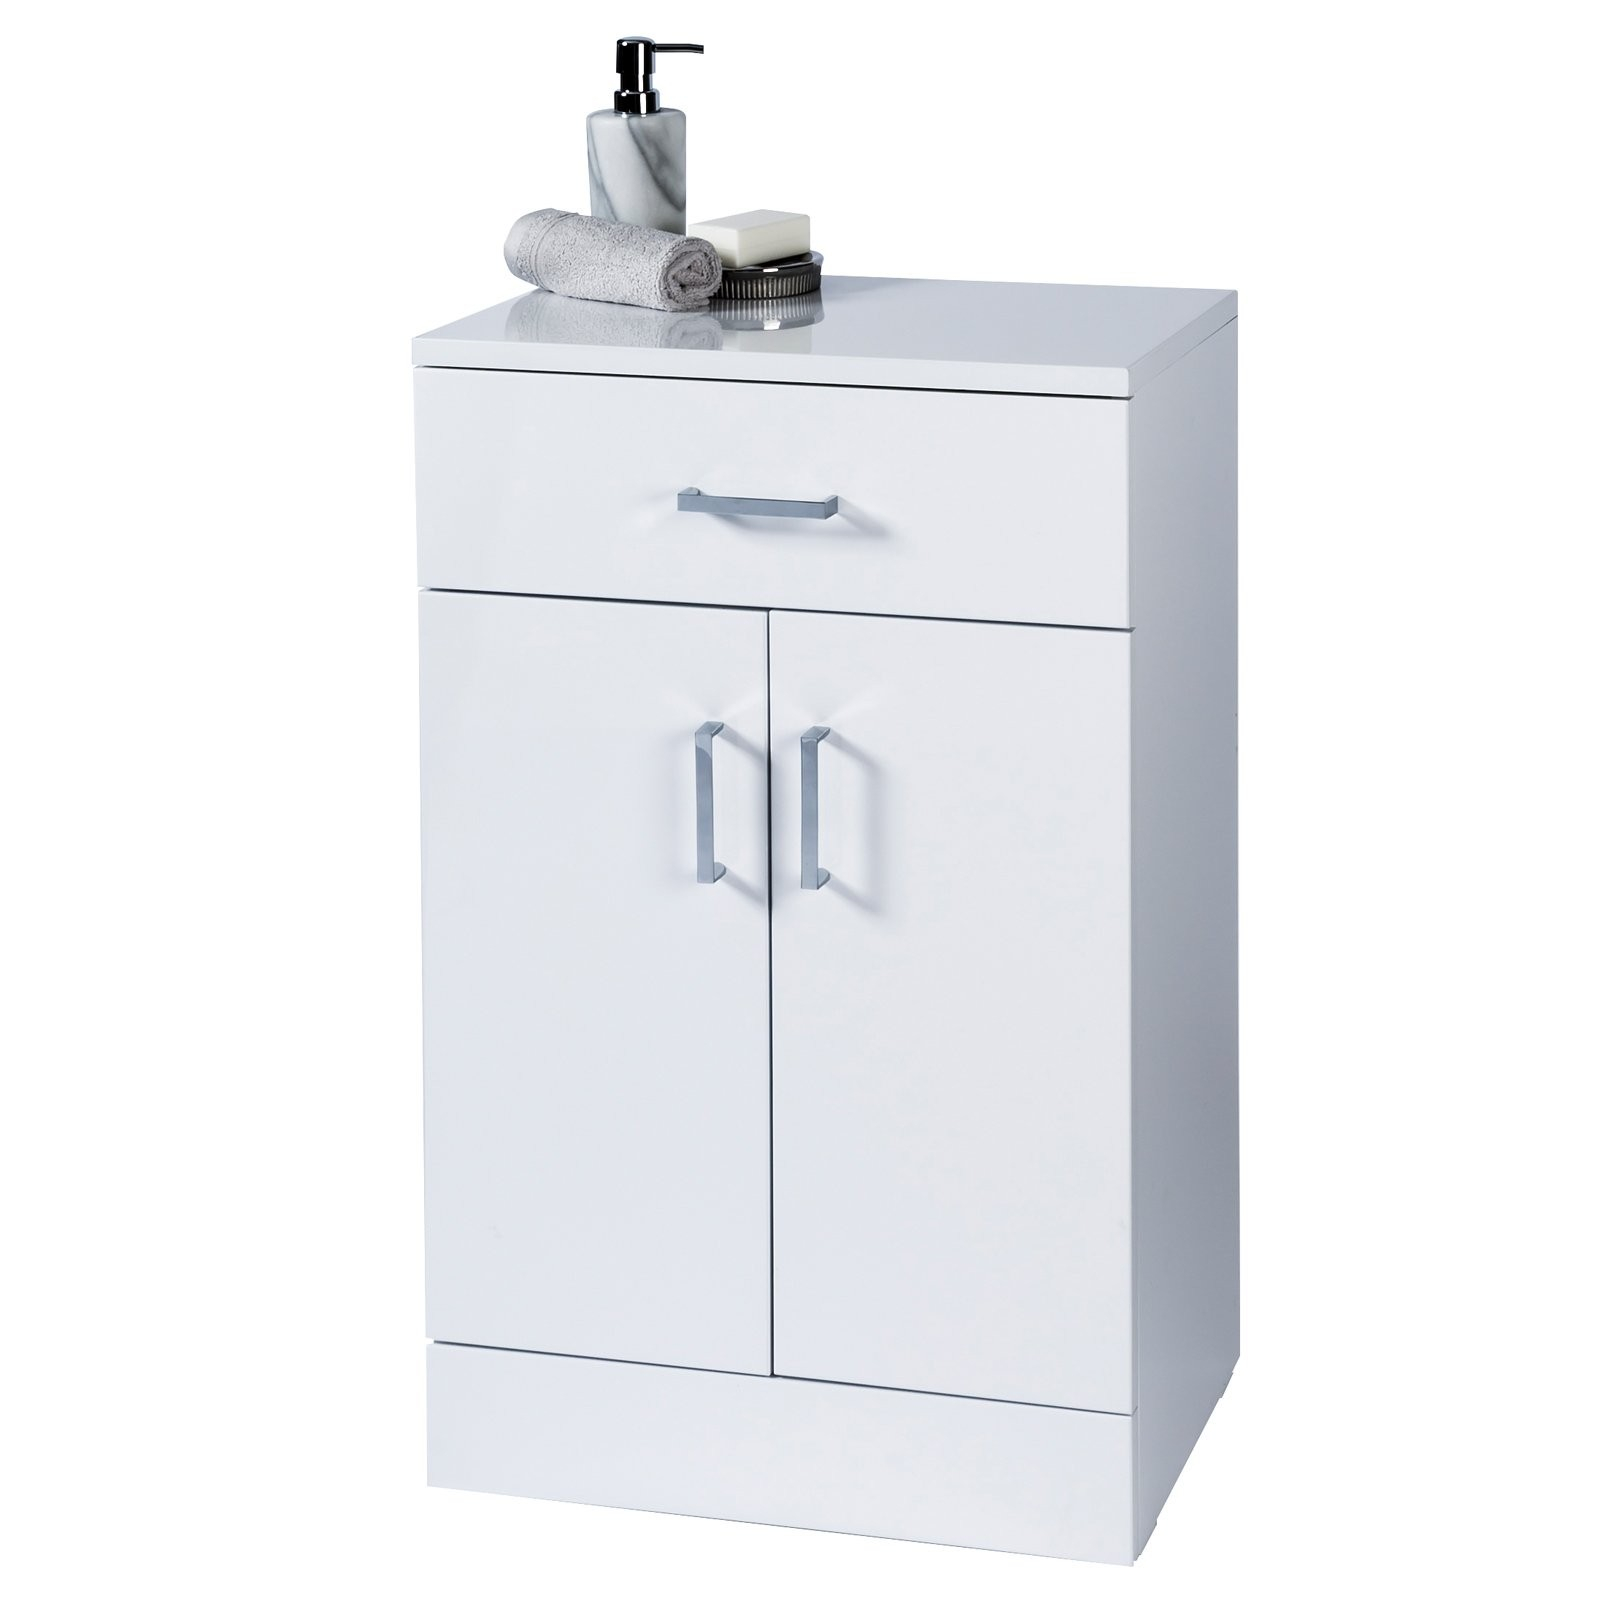 Salerno Freestanding White Gloss Bathroom Cabinet Showerdrape intended for size 1600 X 1600